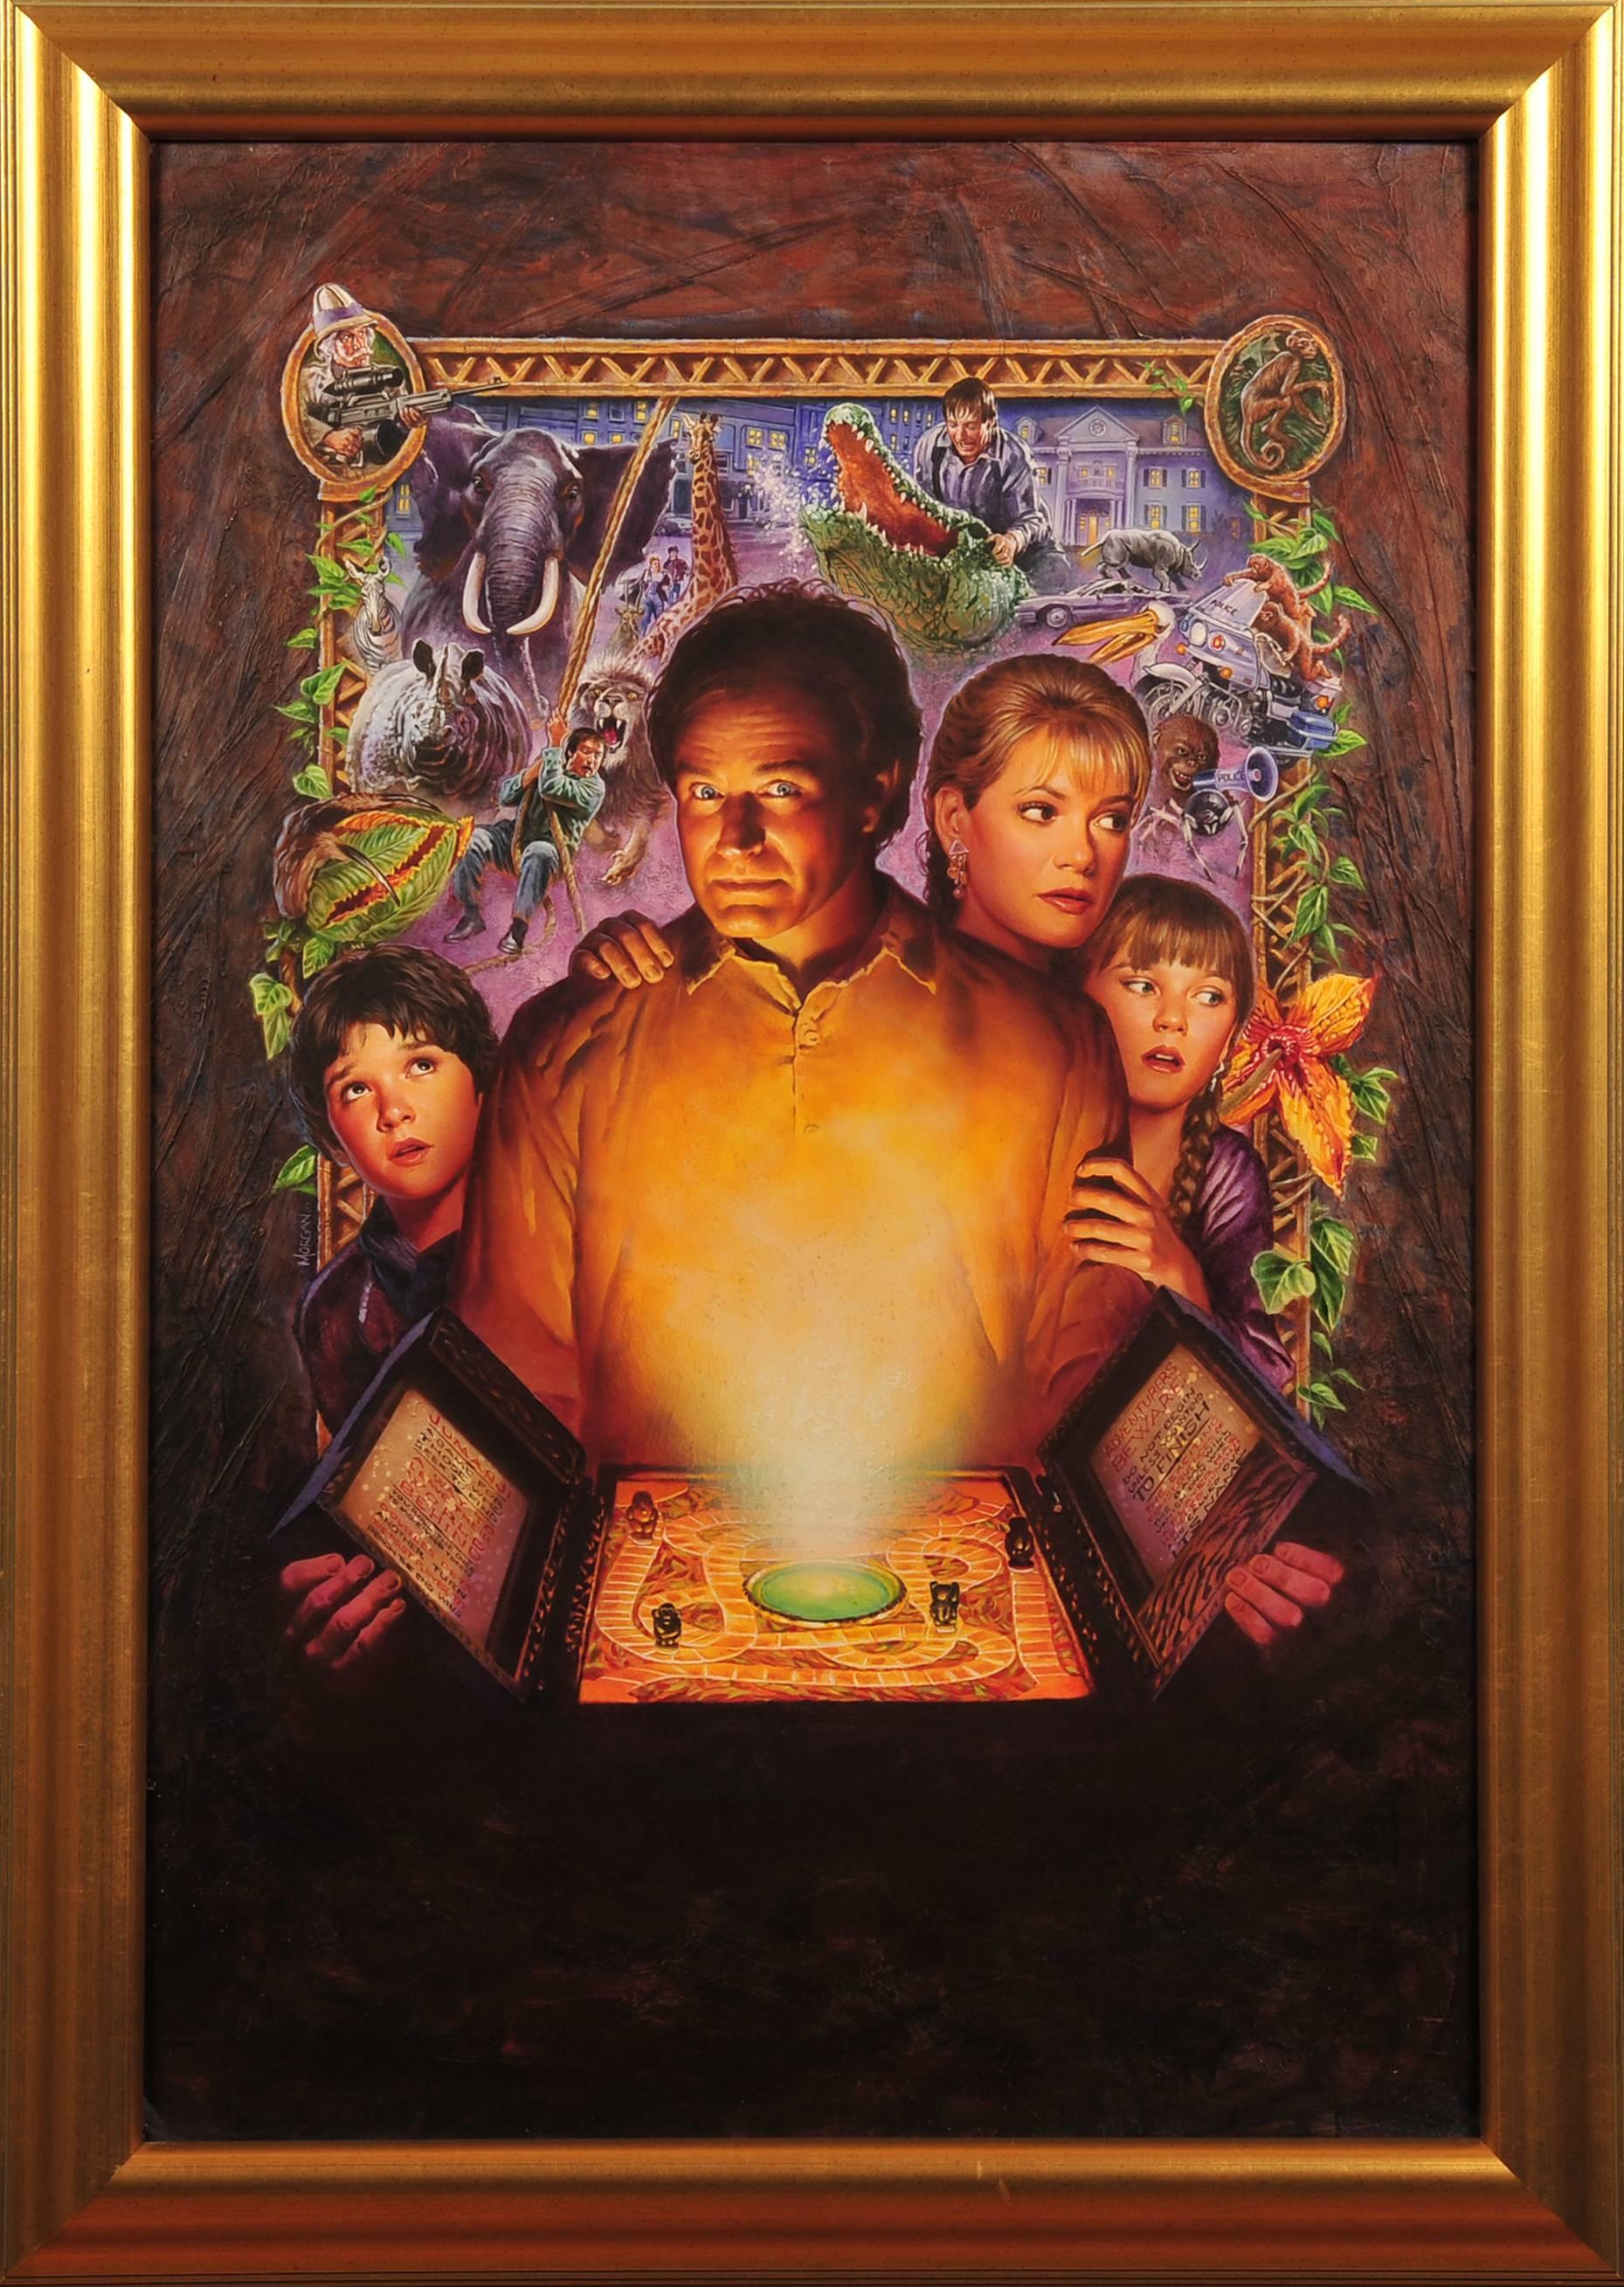 Jumanji, Robin Williams - Painting by Morgan Weistling